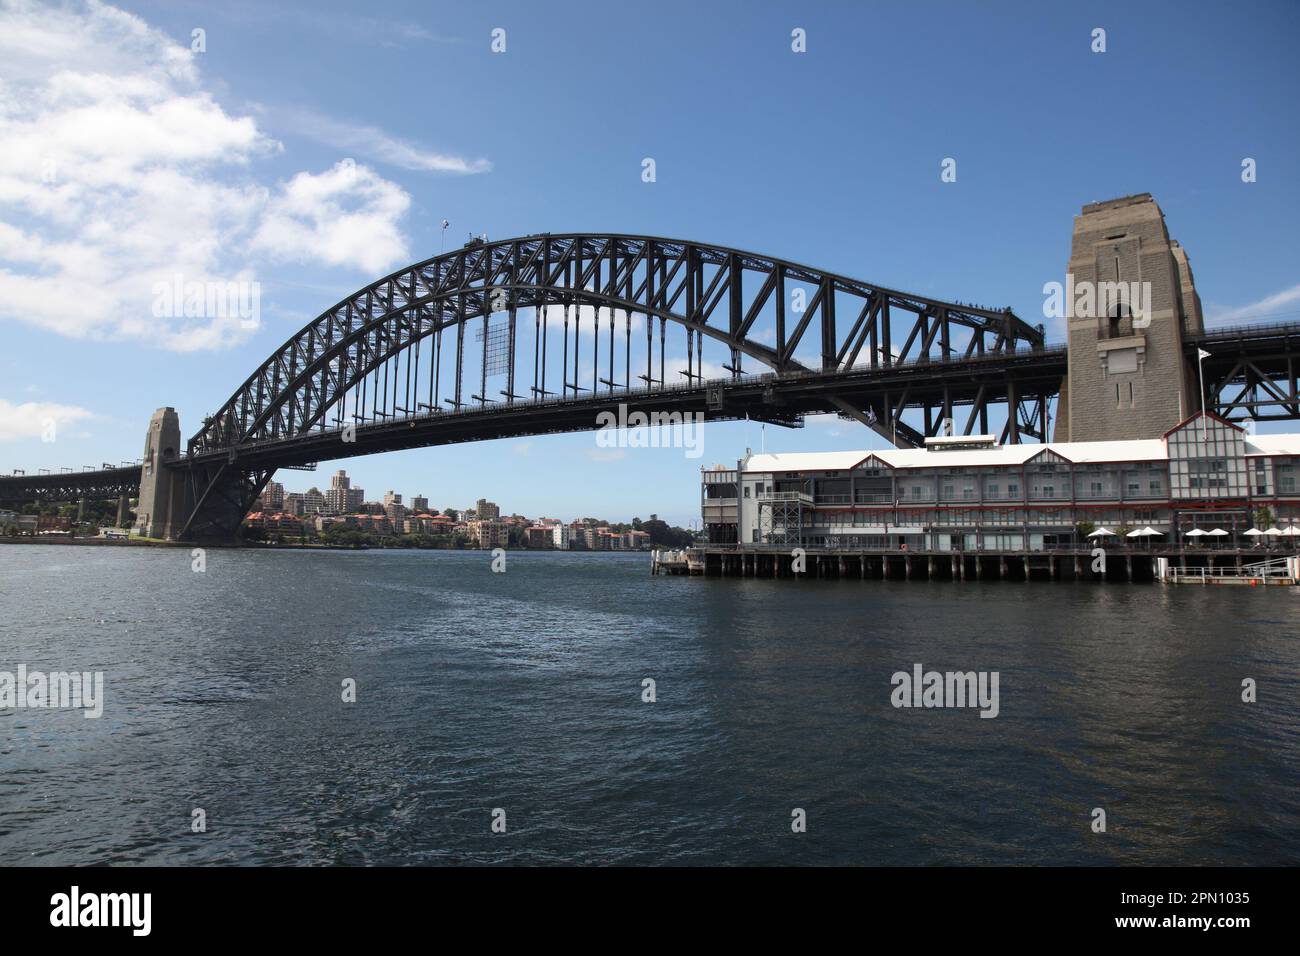 Sydney Harbour bridge on of Australia's most famous landmarks. Stock Photo